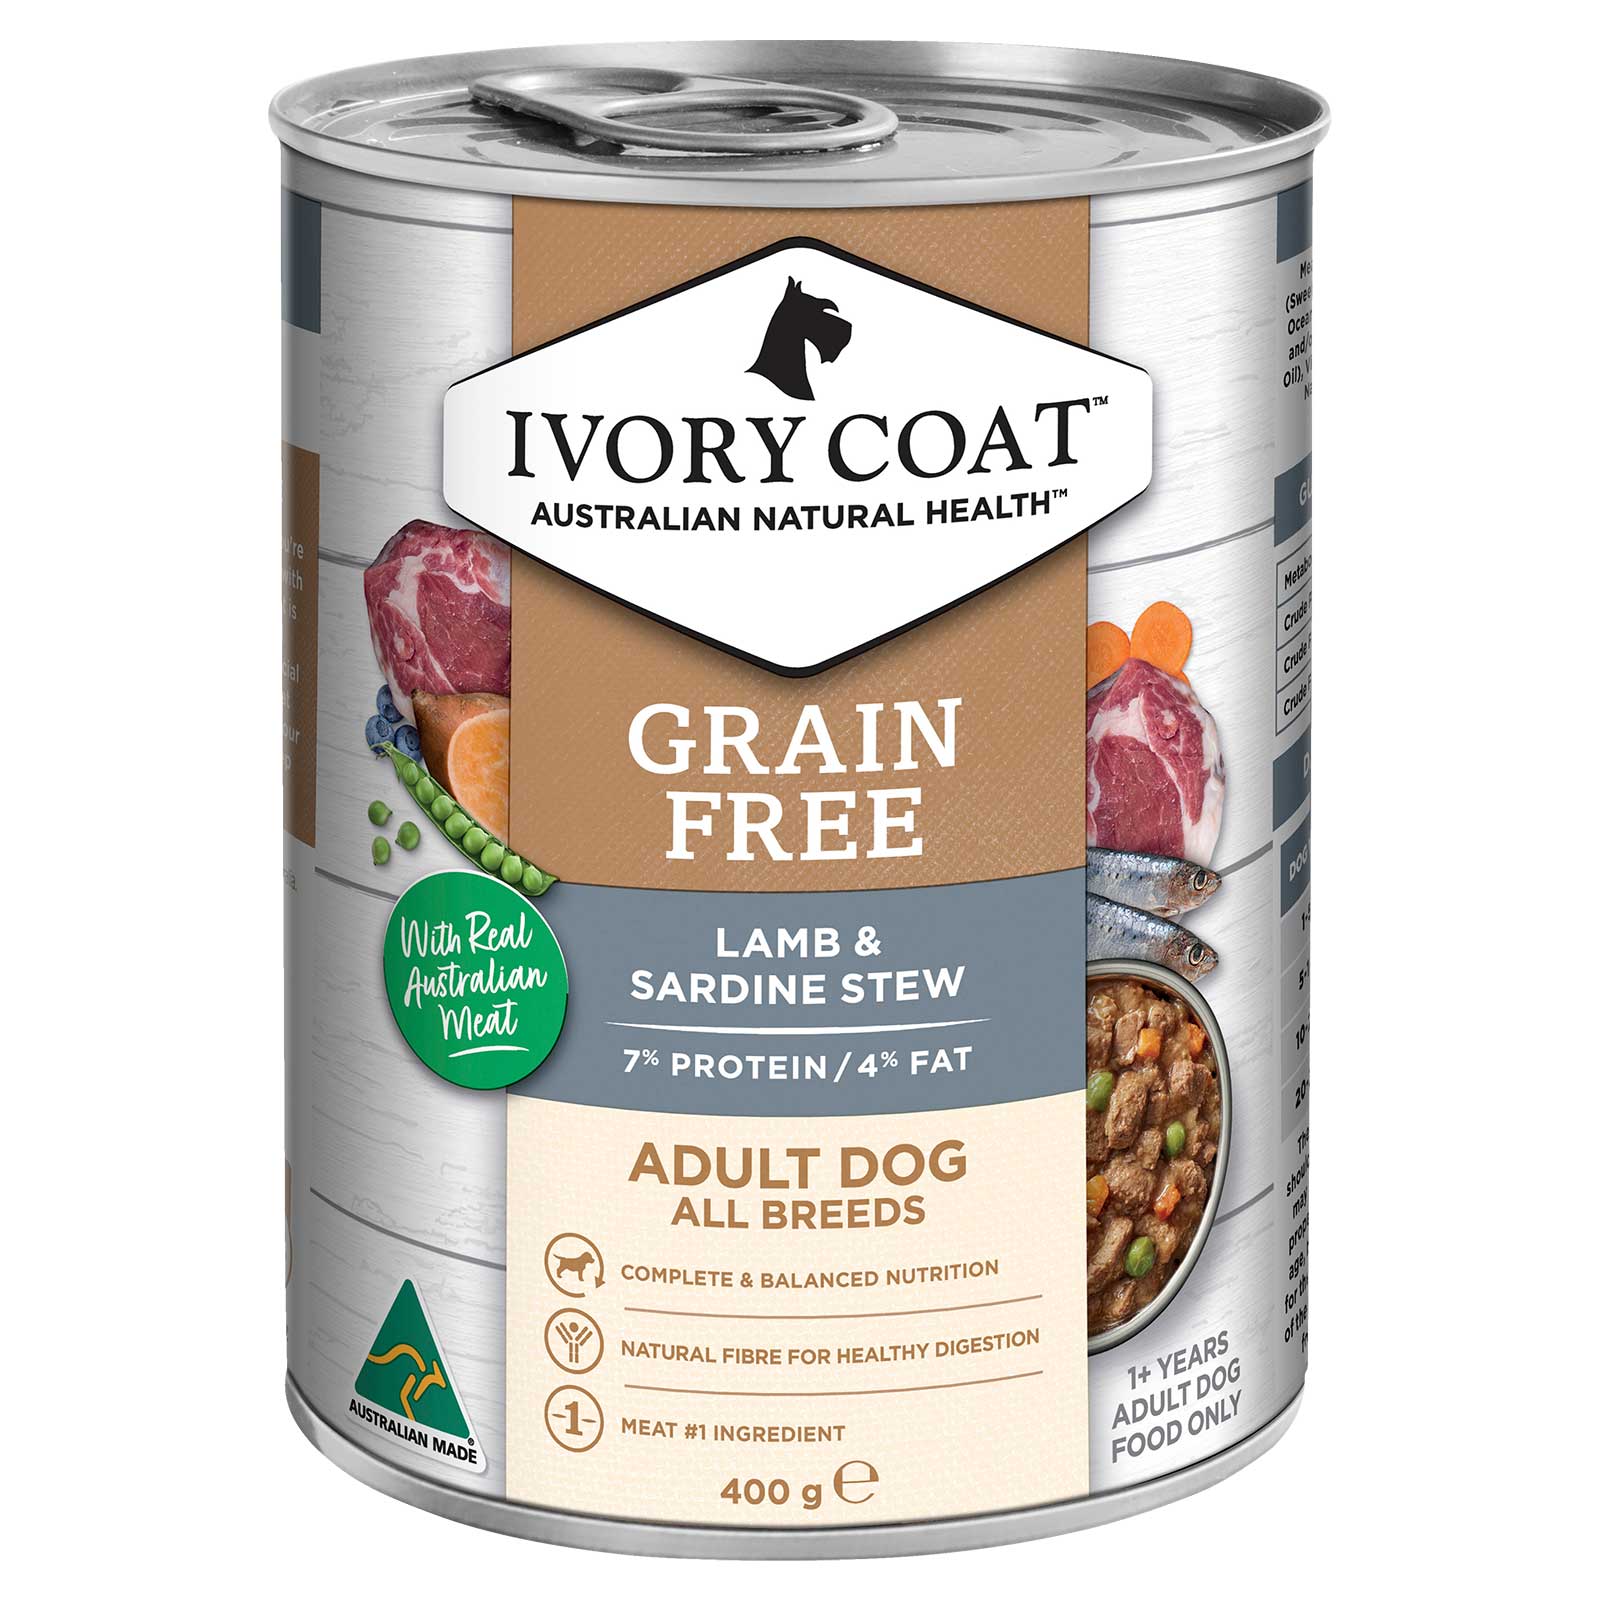 Ivory Coat Grain Free Dog Food Can Adult Lamb & Sardine Stew